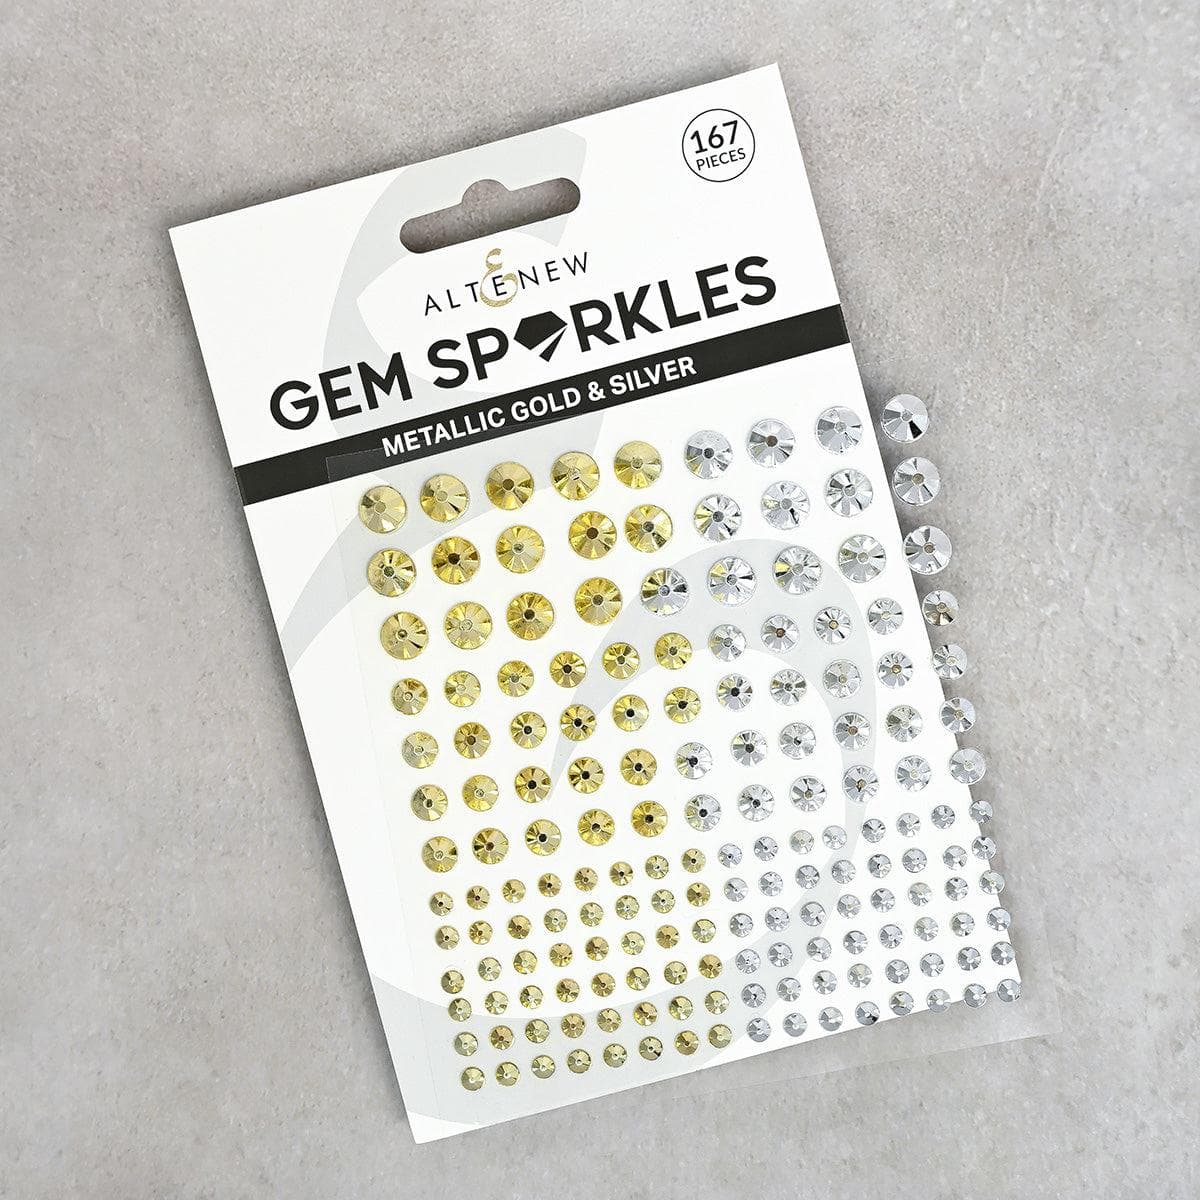 Metallic Gold & Silver Gem Sparkles